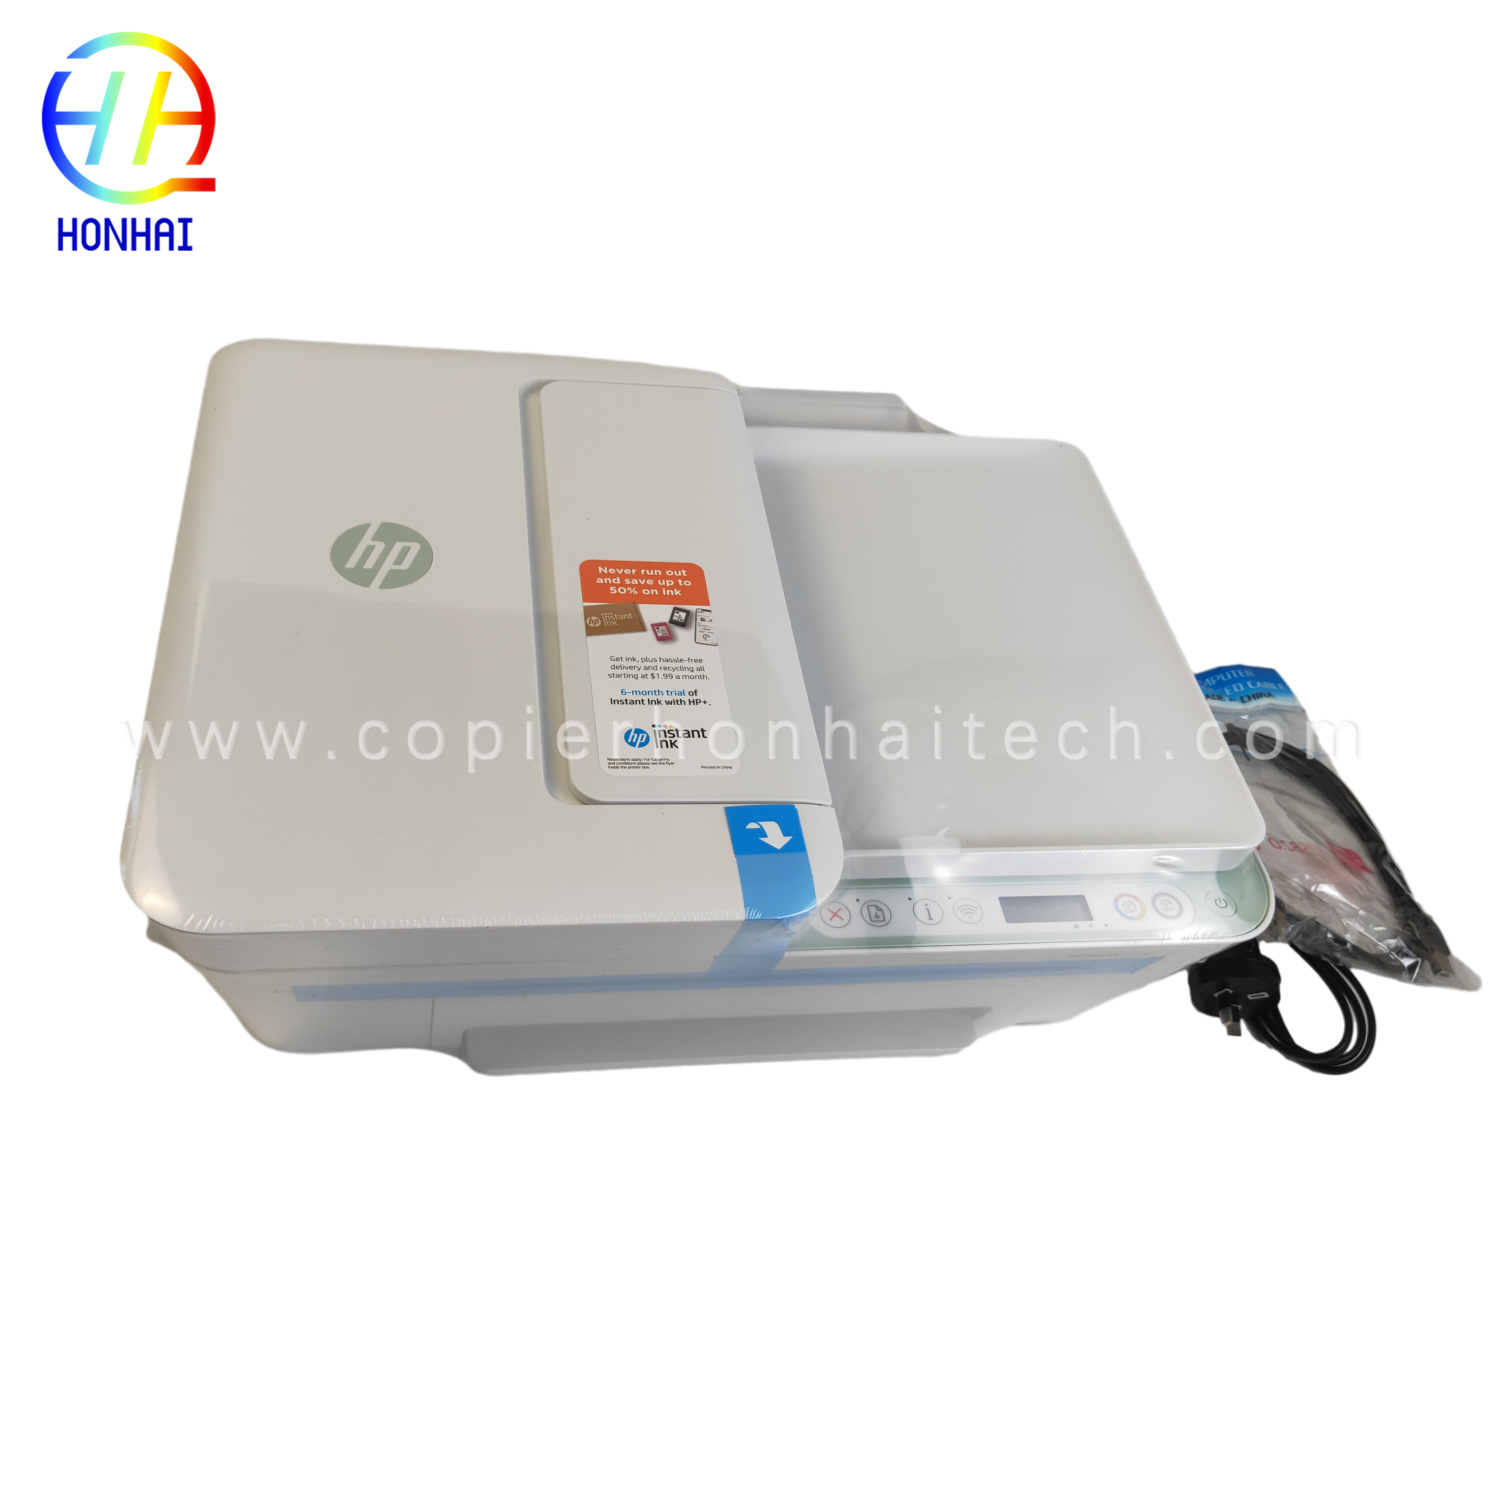 https://www.copierhonhaitech.com/original-new-wireless-printer-for-hp-deskjet-4122e-all-in-one-printer-scan-and-copy-home-office-students-and-home- pūreretā-26q96a-hua/